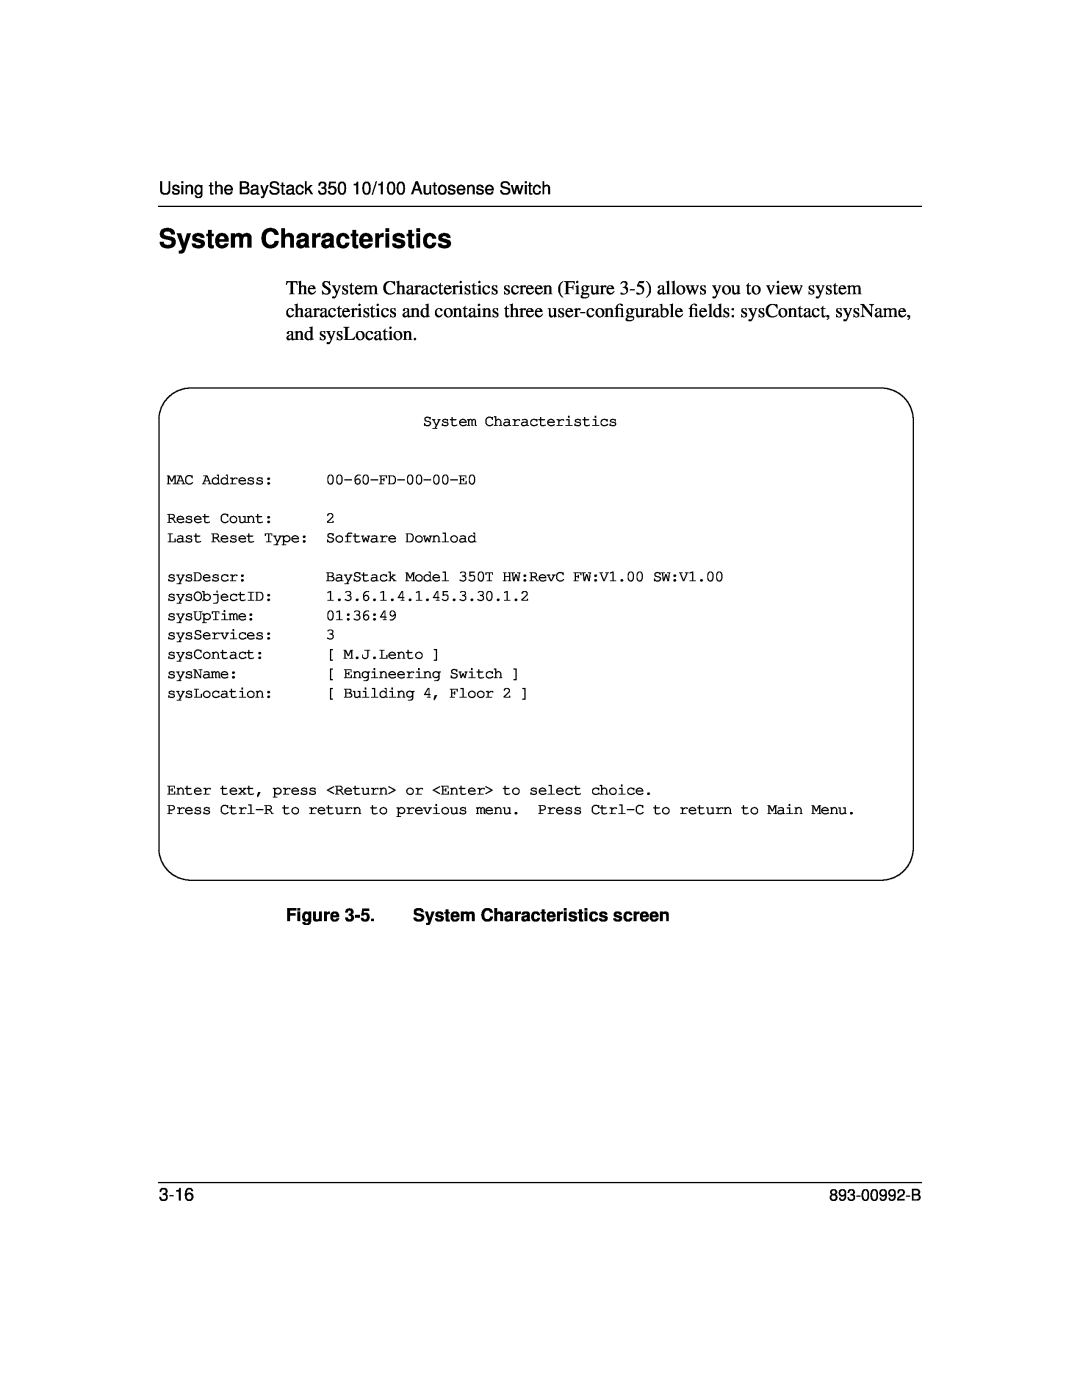 Bay Technical Associates manual System Characteristics, Using the BayStack 350 10/100 Autosense Switch, 3-16 